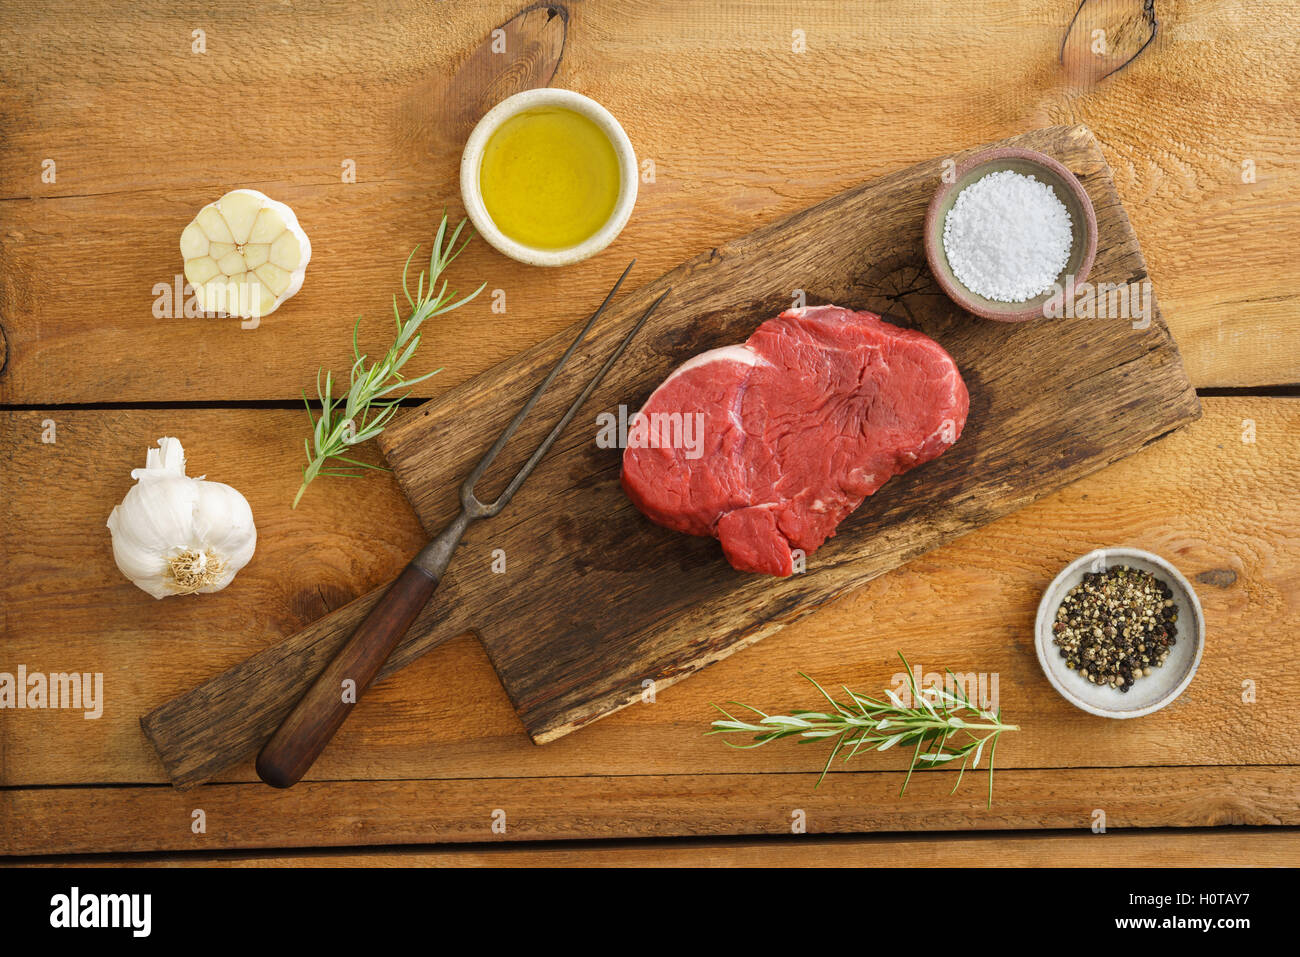 Uncooked fillet steak Stock Photo